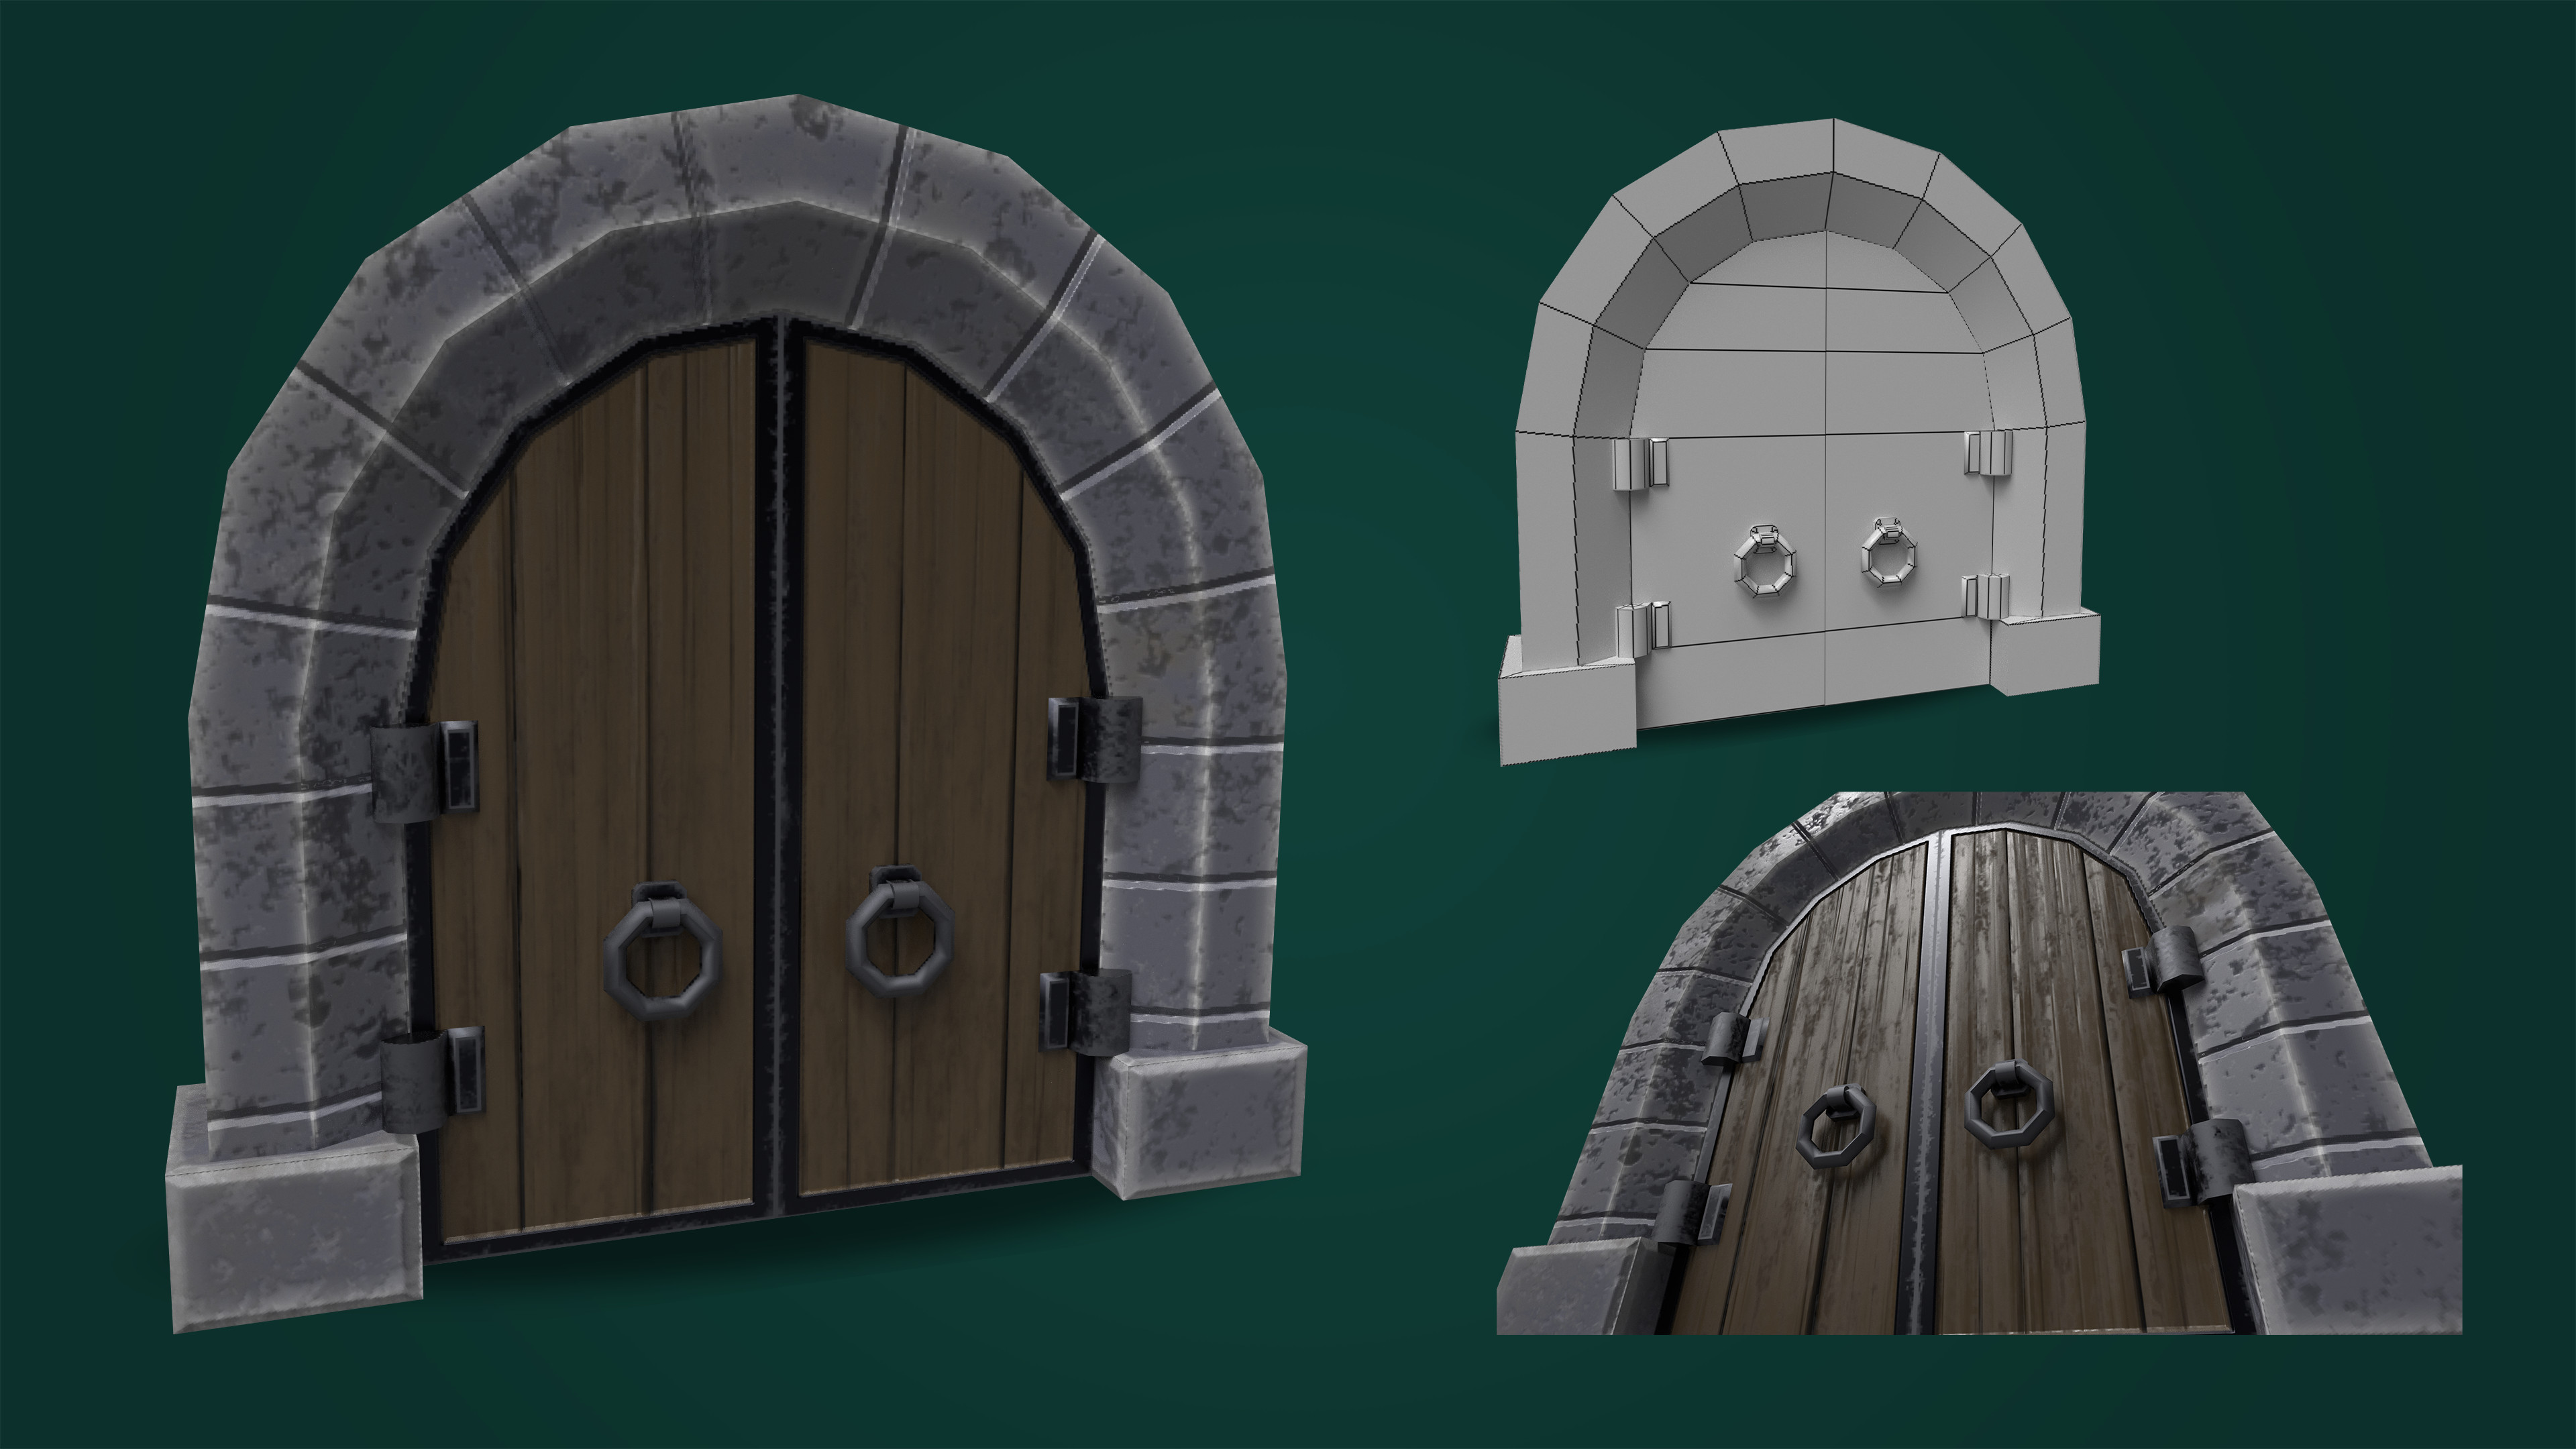 Wooden Dungeon Door.
Check it out on Sketchfab below!